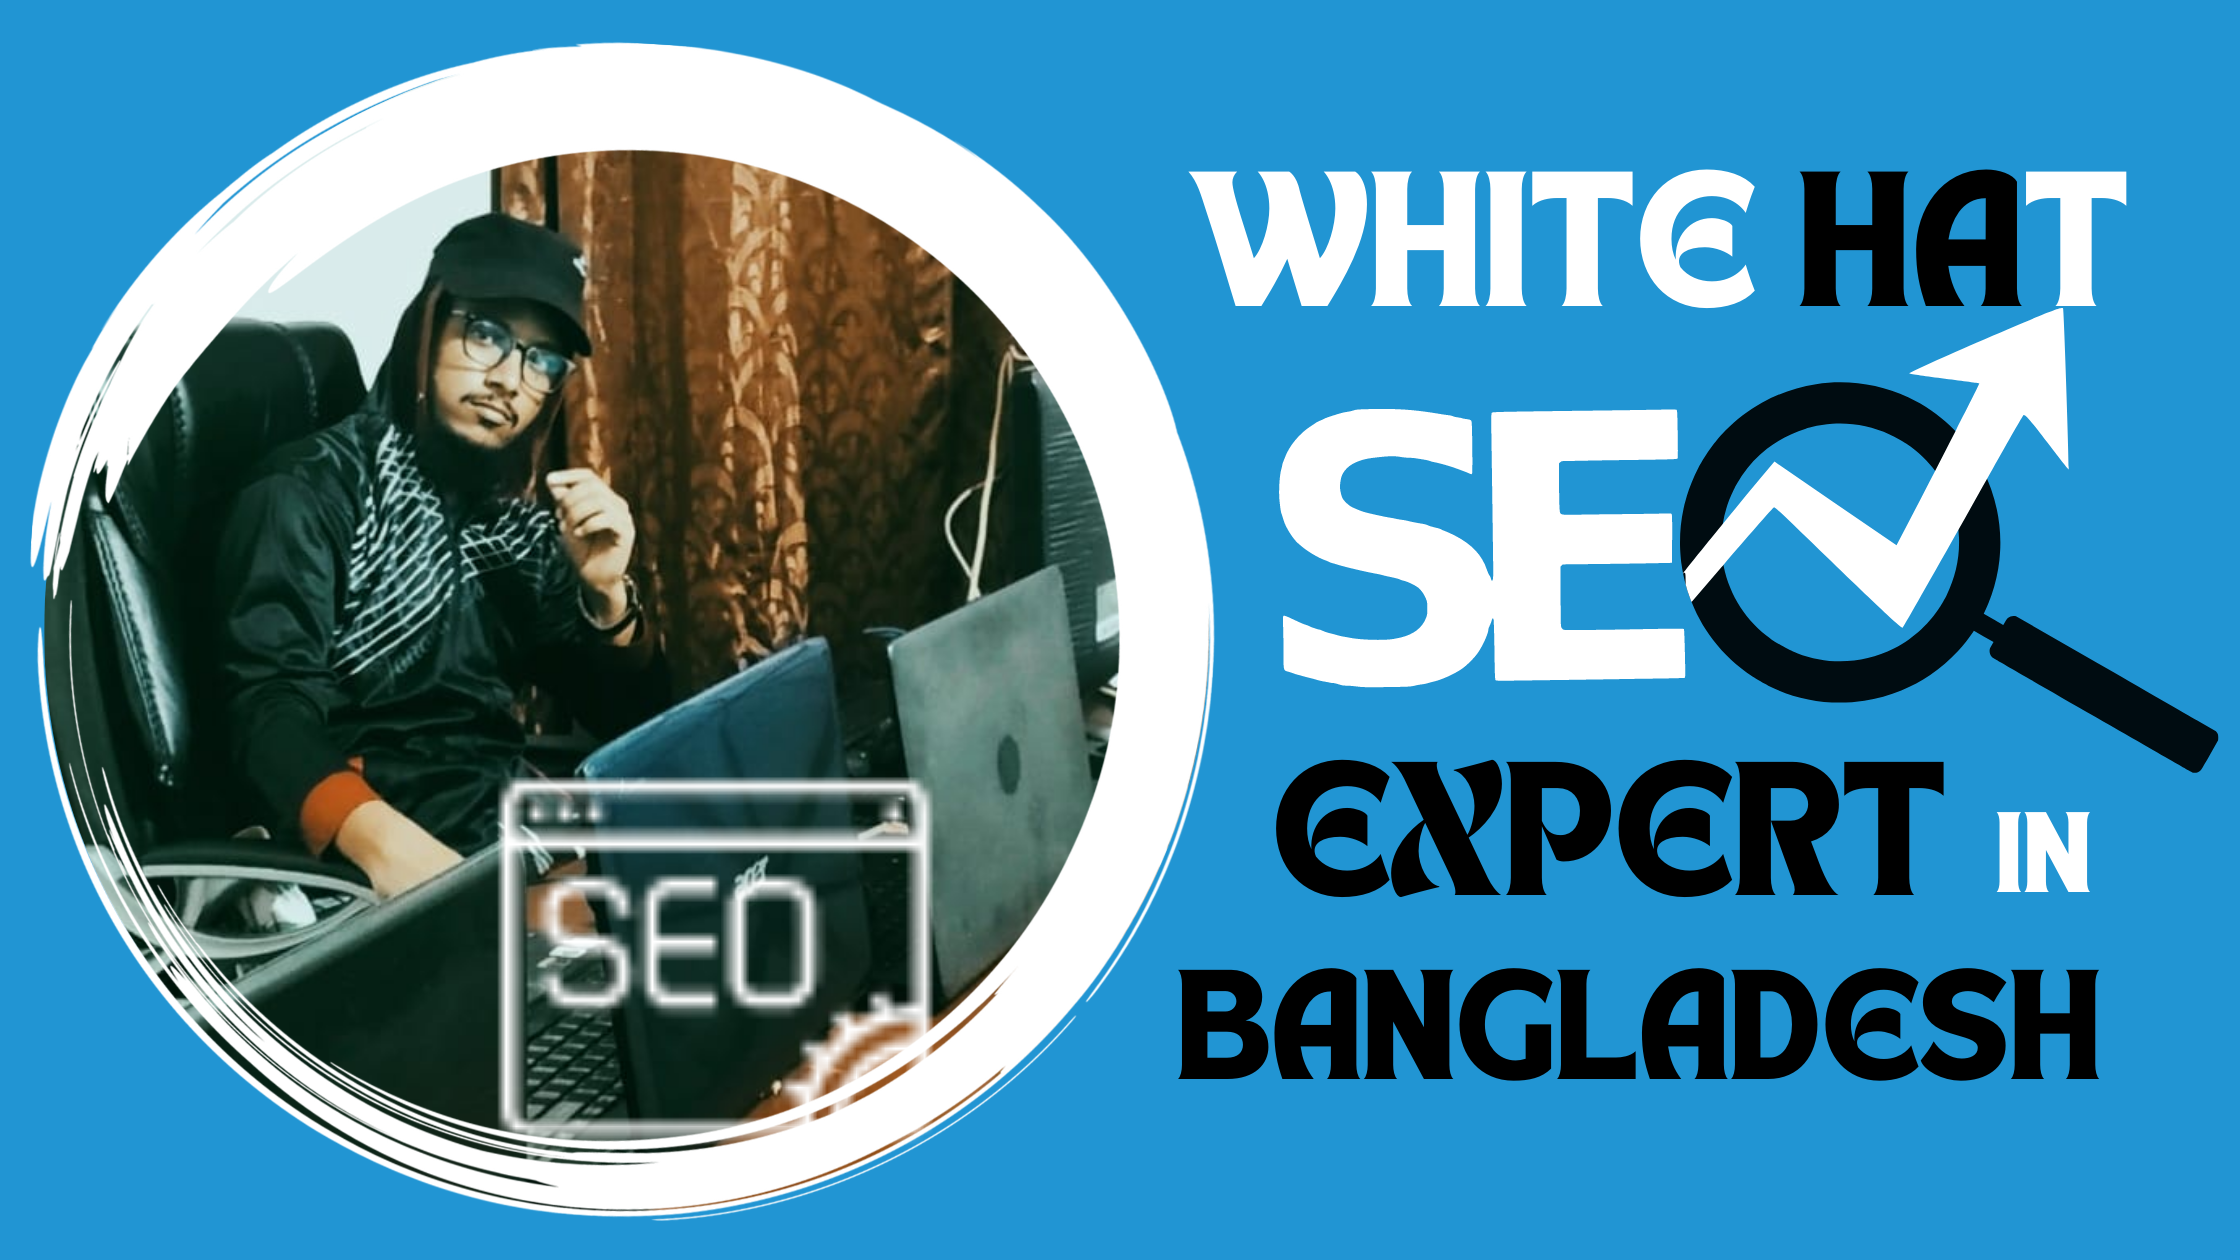 SEO Expert in Bangladesh: Hire A White Hat SEO Expert